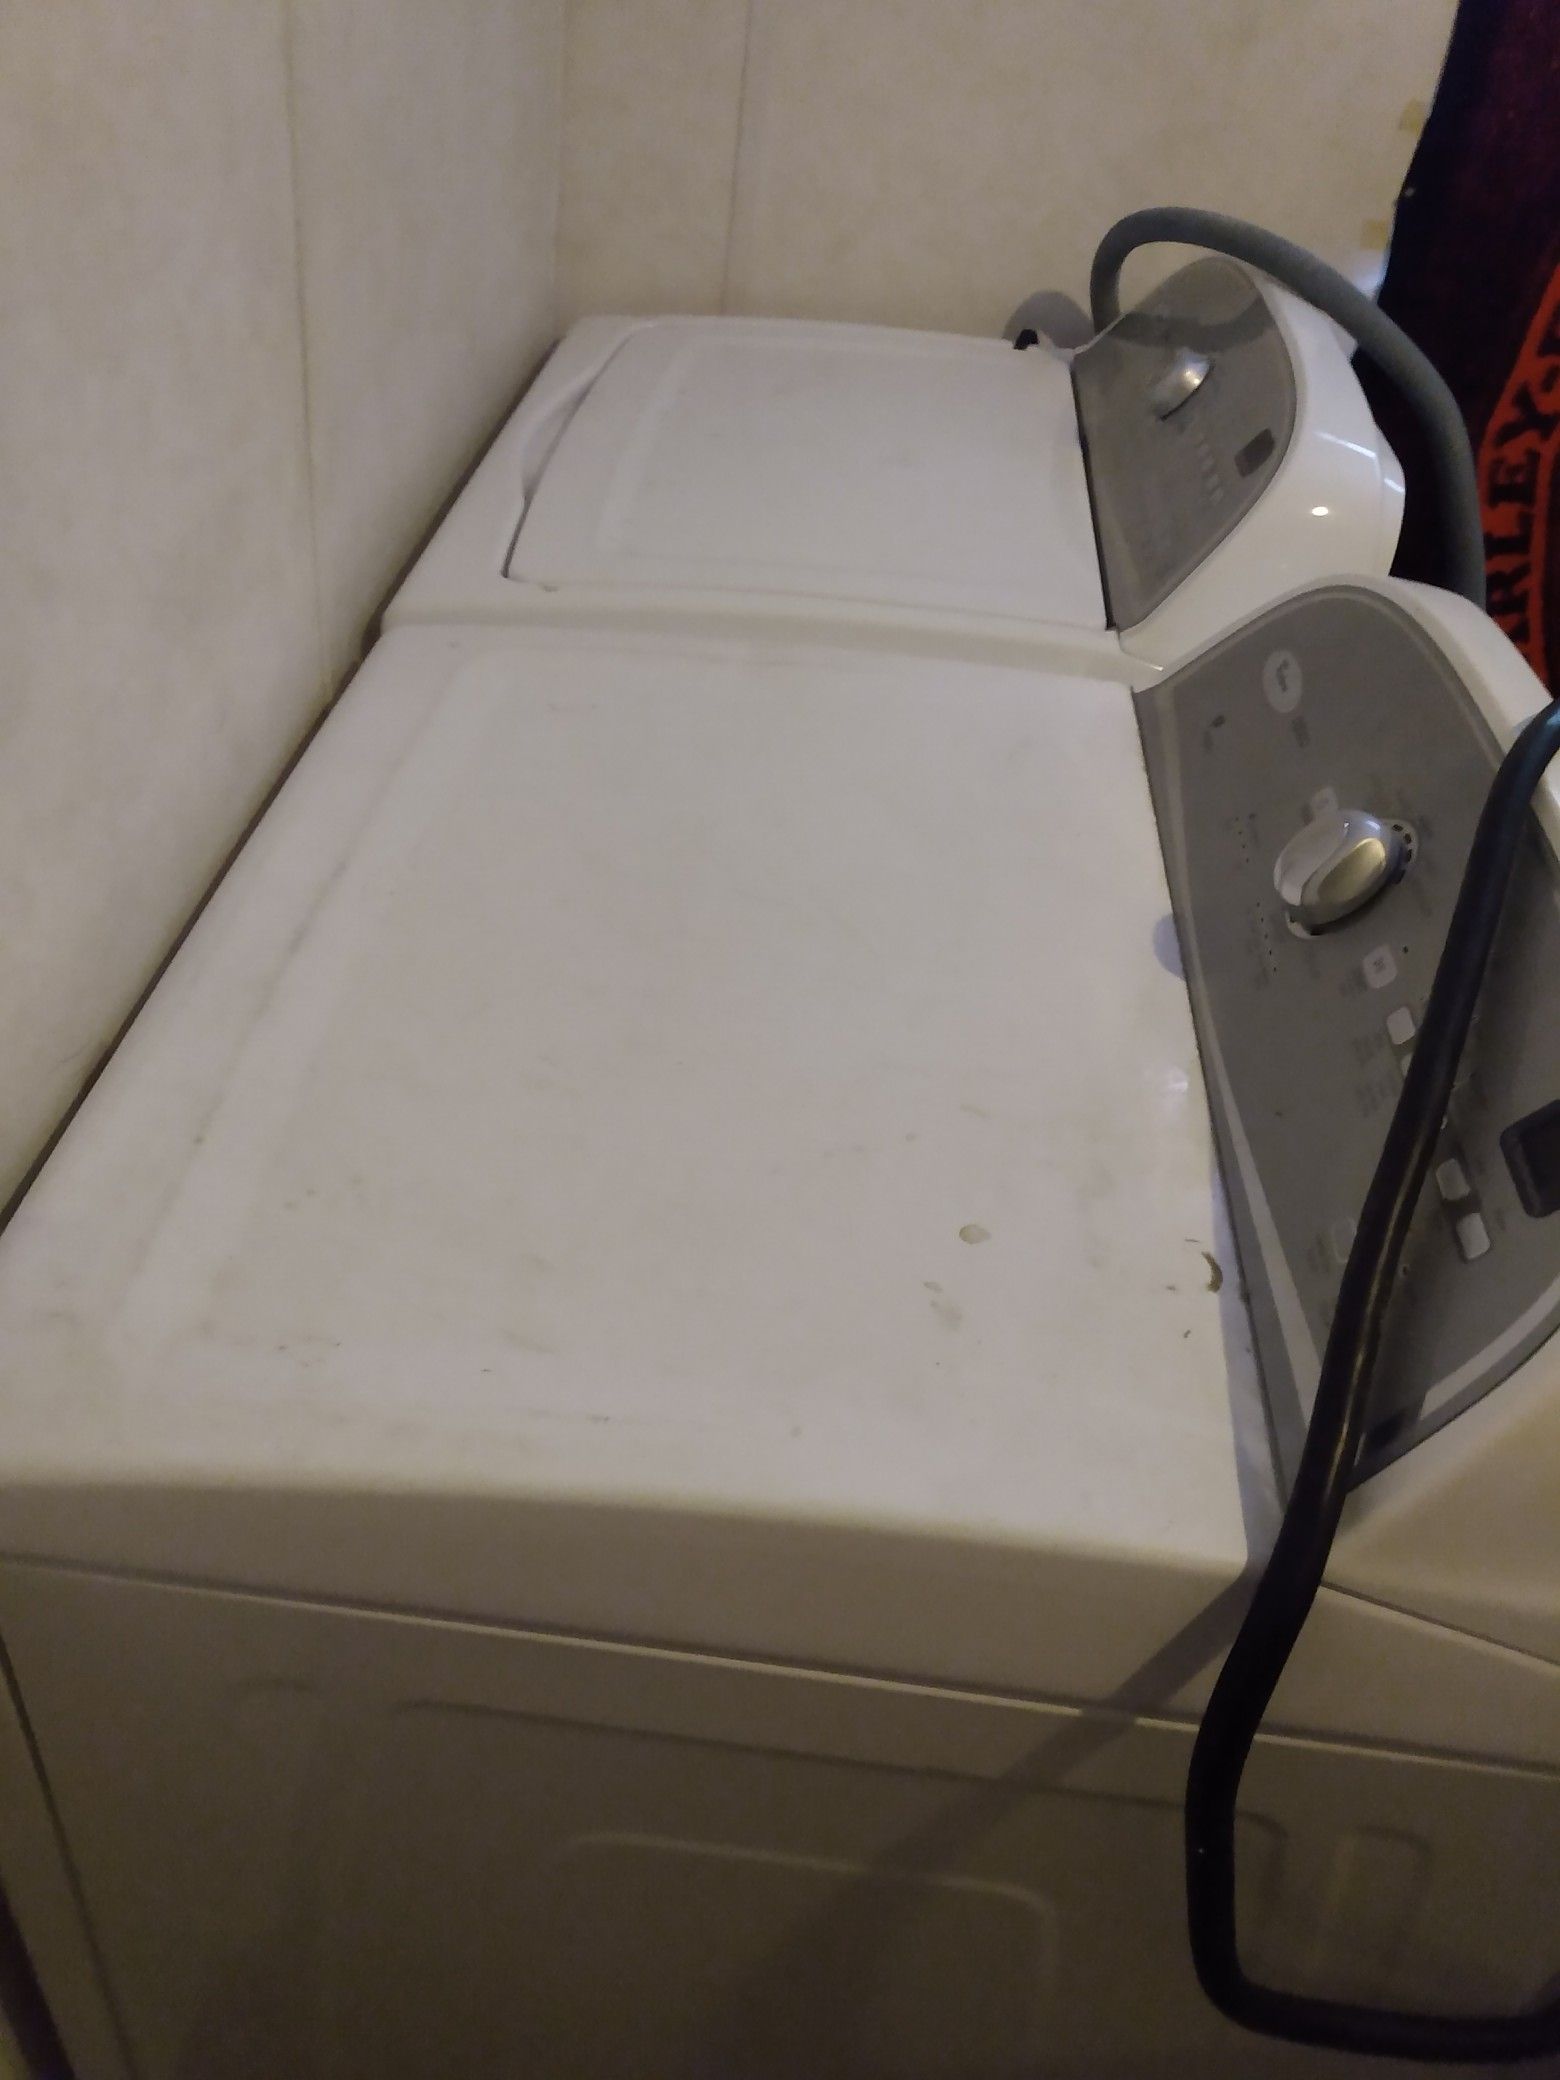 Whirlpool washer/dryer